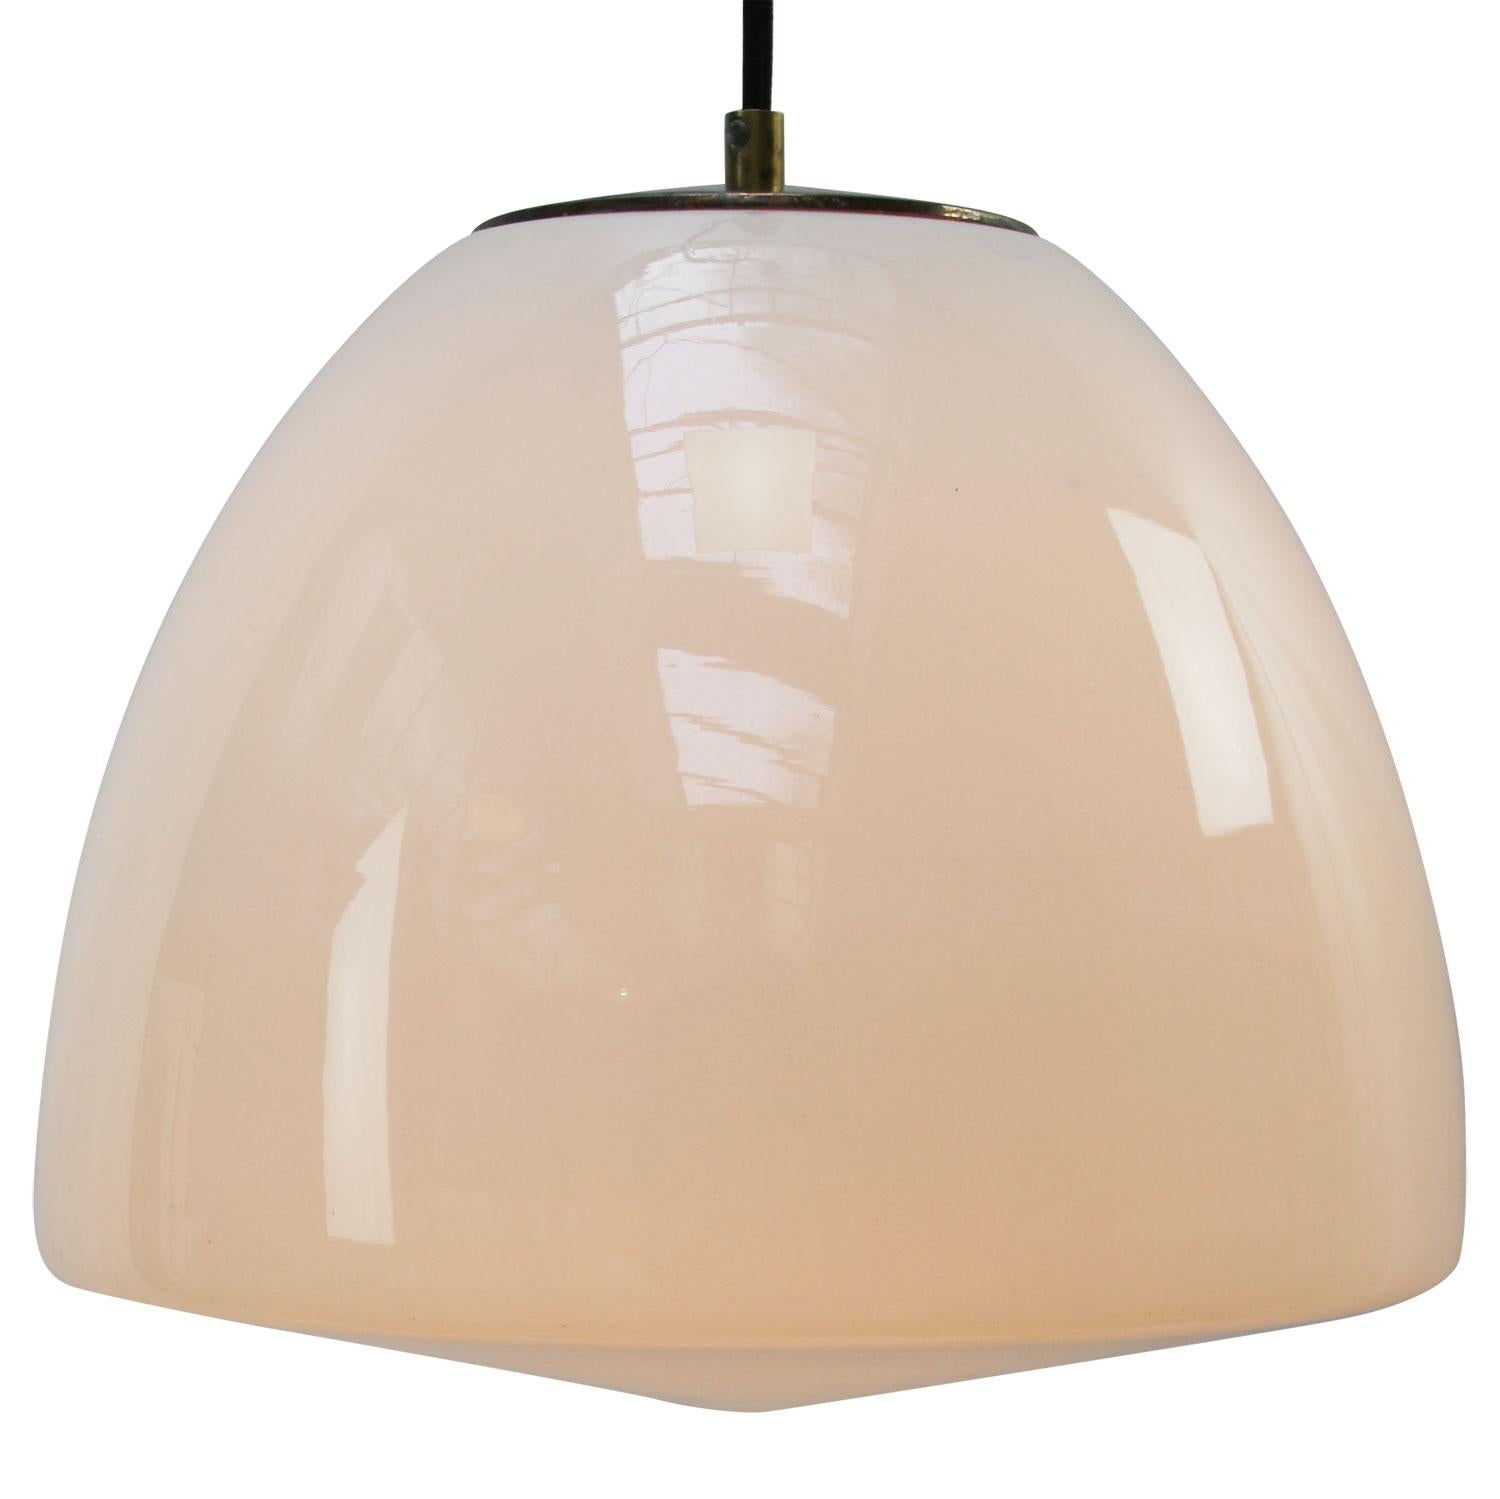 Bauhaus White Opaline Milk Glass Vintage Industrial Brass Top Pendant Light